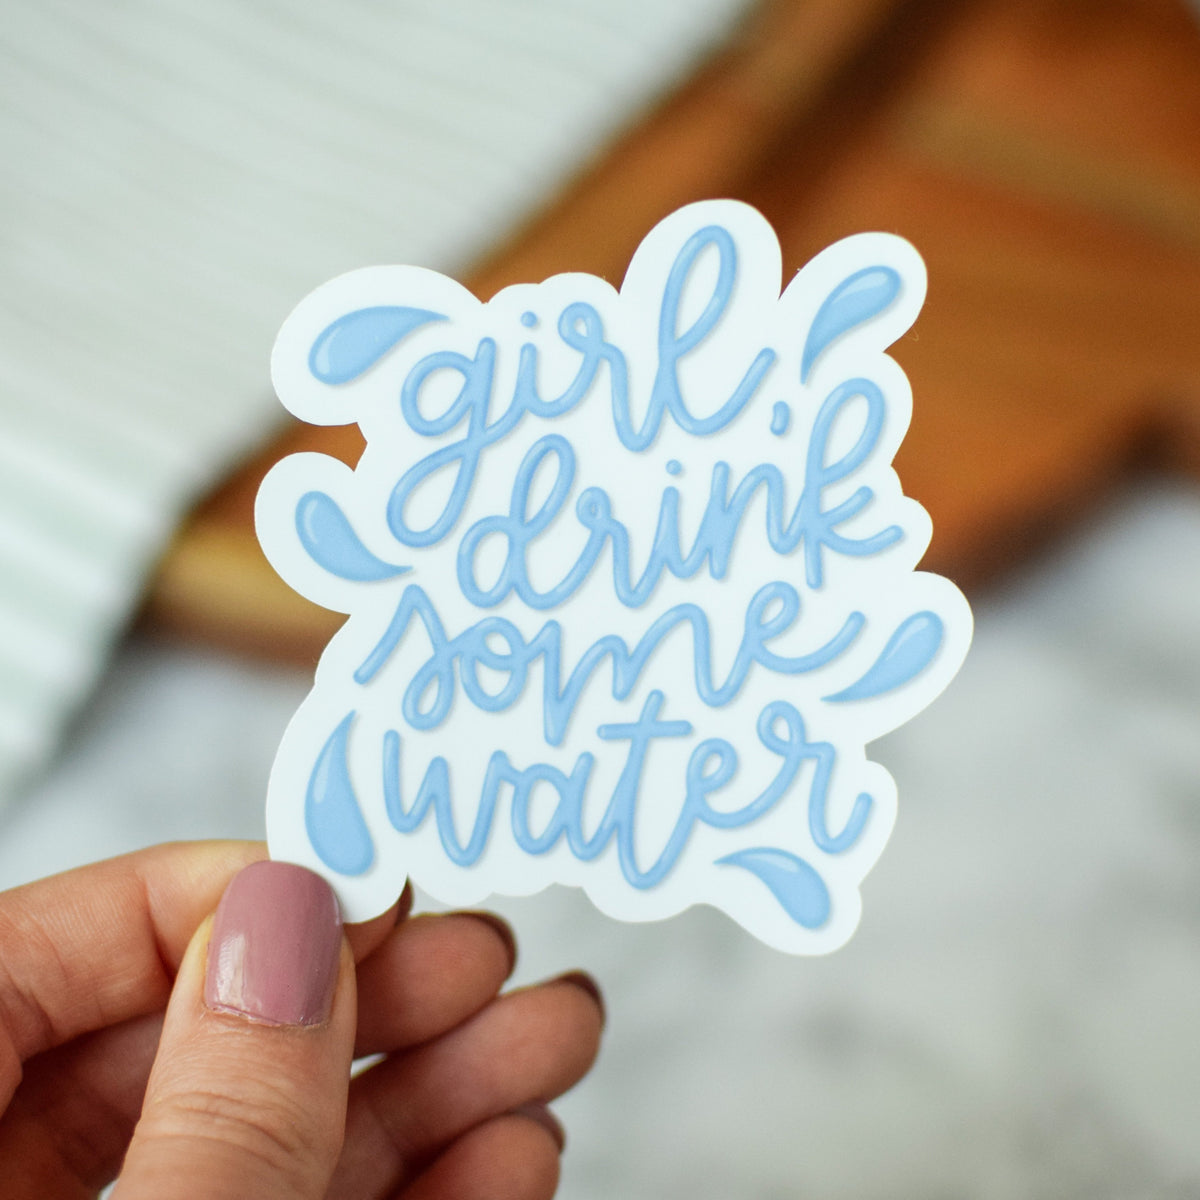 Louisville Kentucky Sticker KY Girl Water Bottle Sticker 